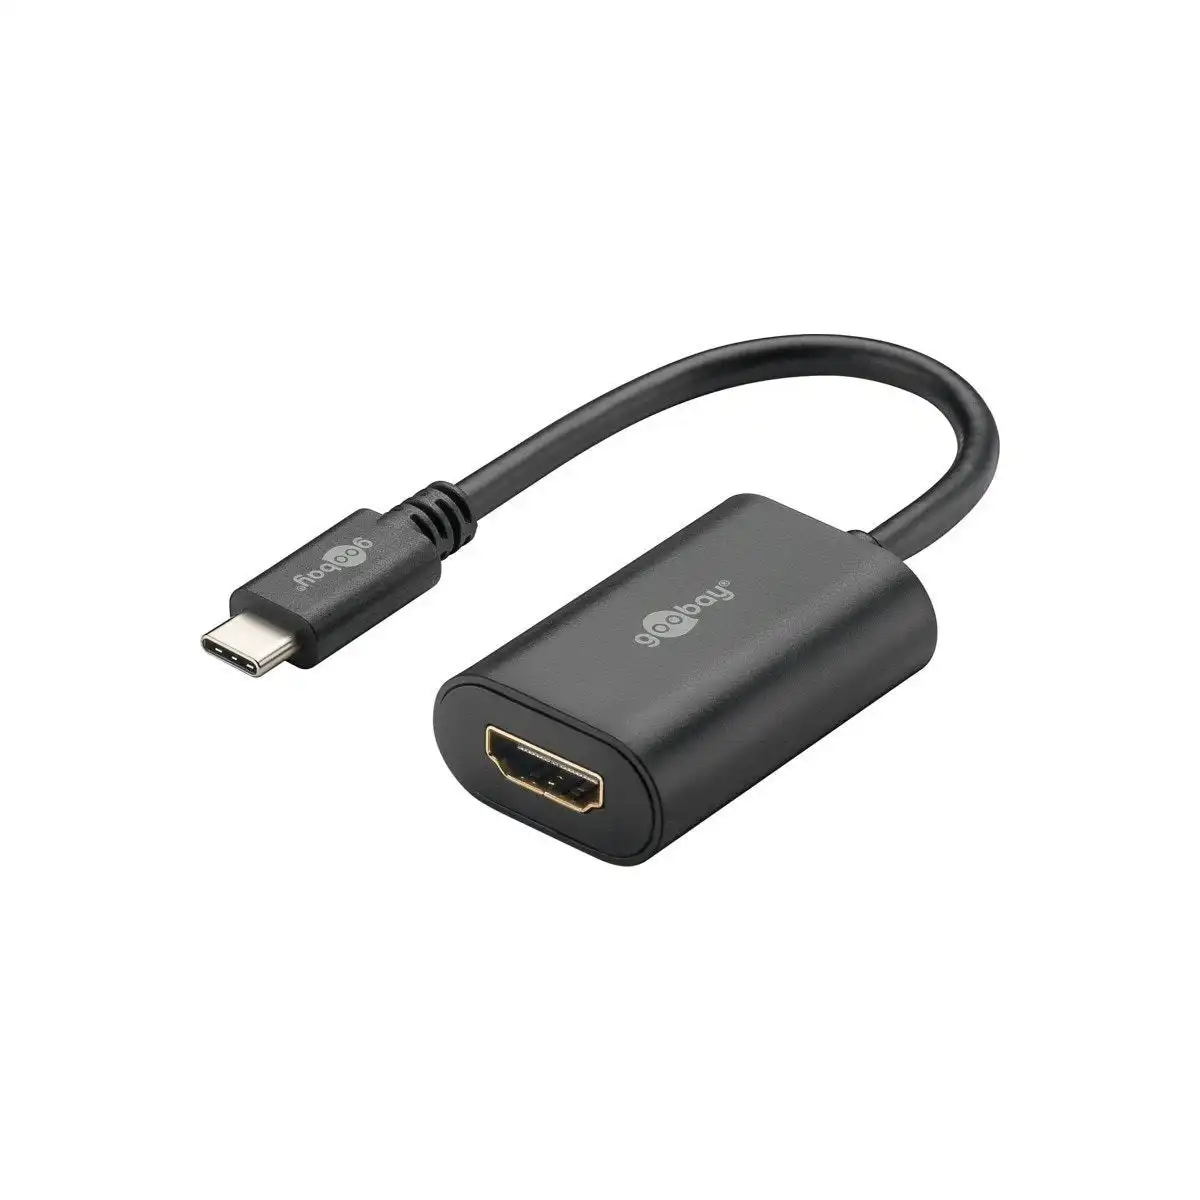 Goobay USB-C HDMI adapter (4k 60 Hz) black  0.2m